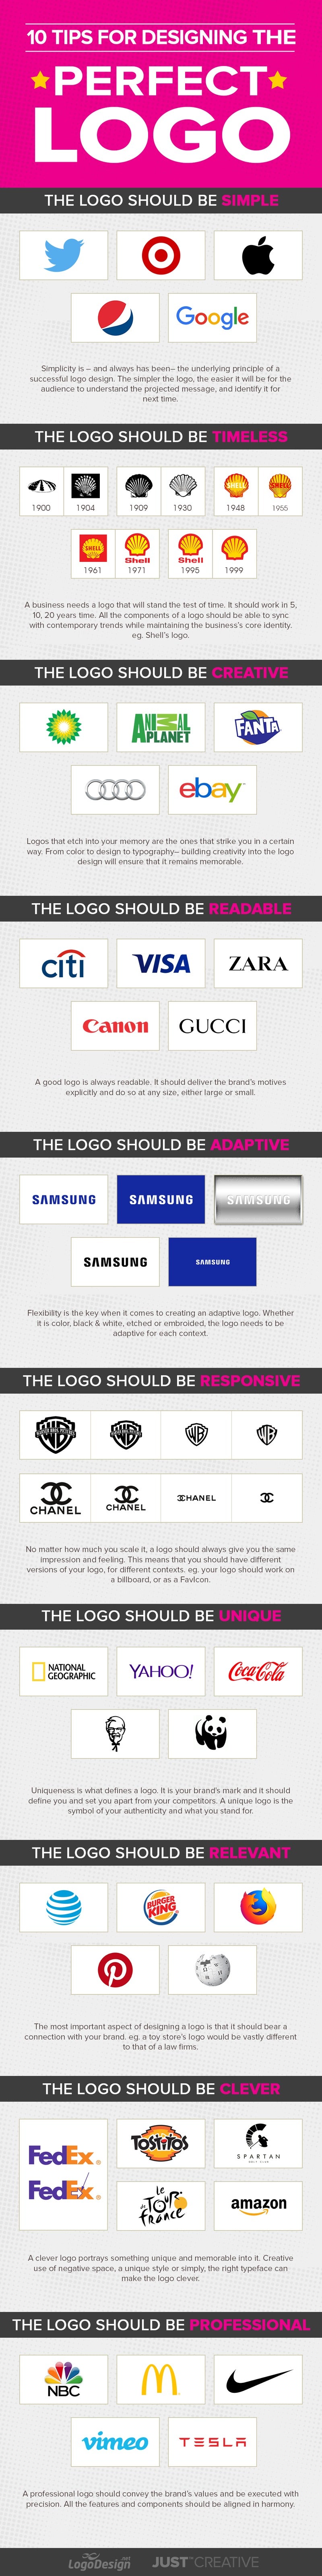 Logo Design Infographic